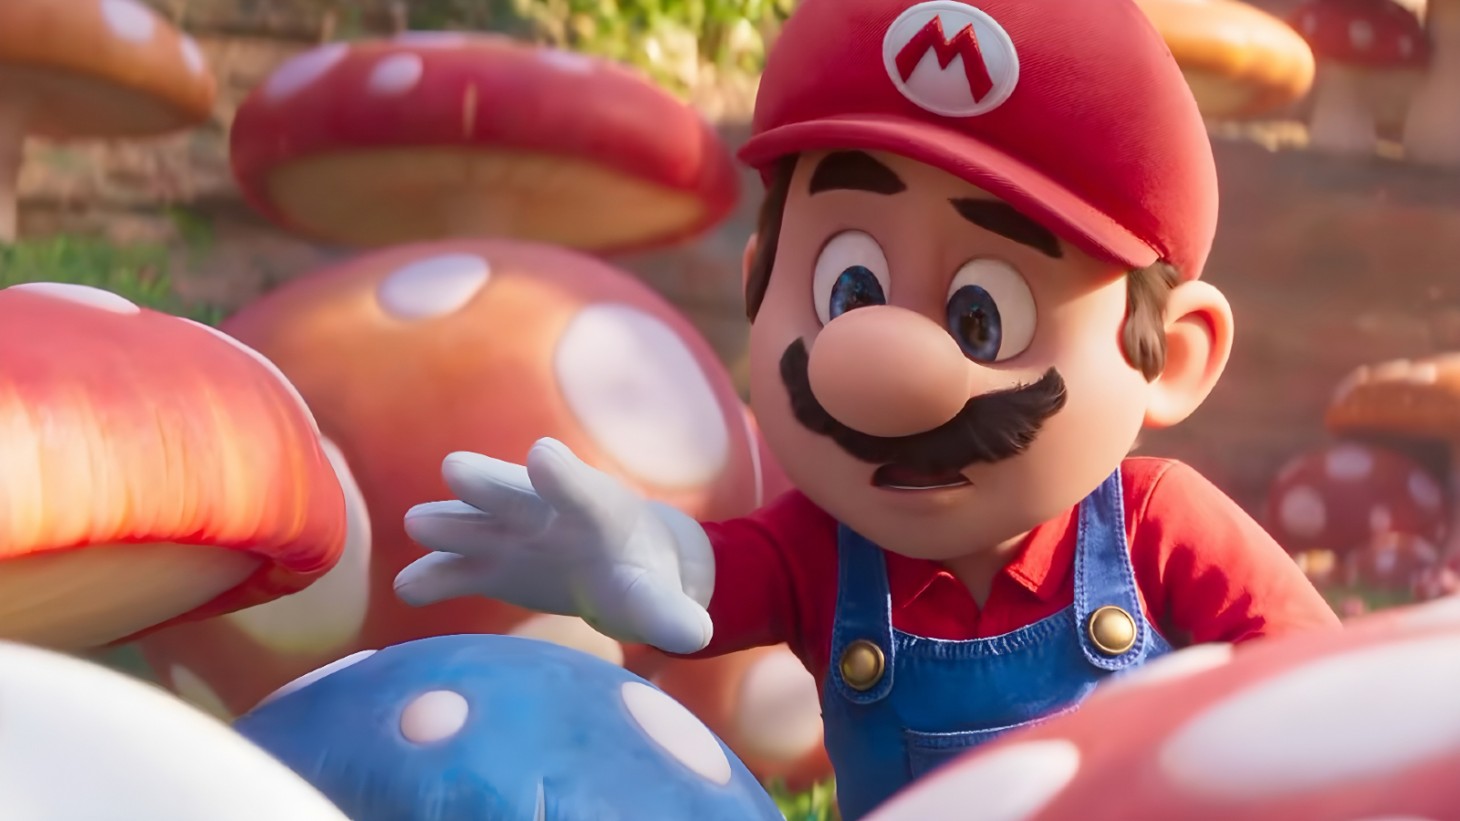 Chris Pratt, Super Mario Bros. Movie Team on Mario Voice Reaction